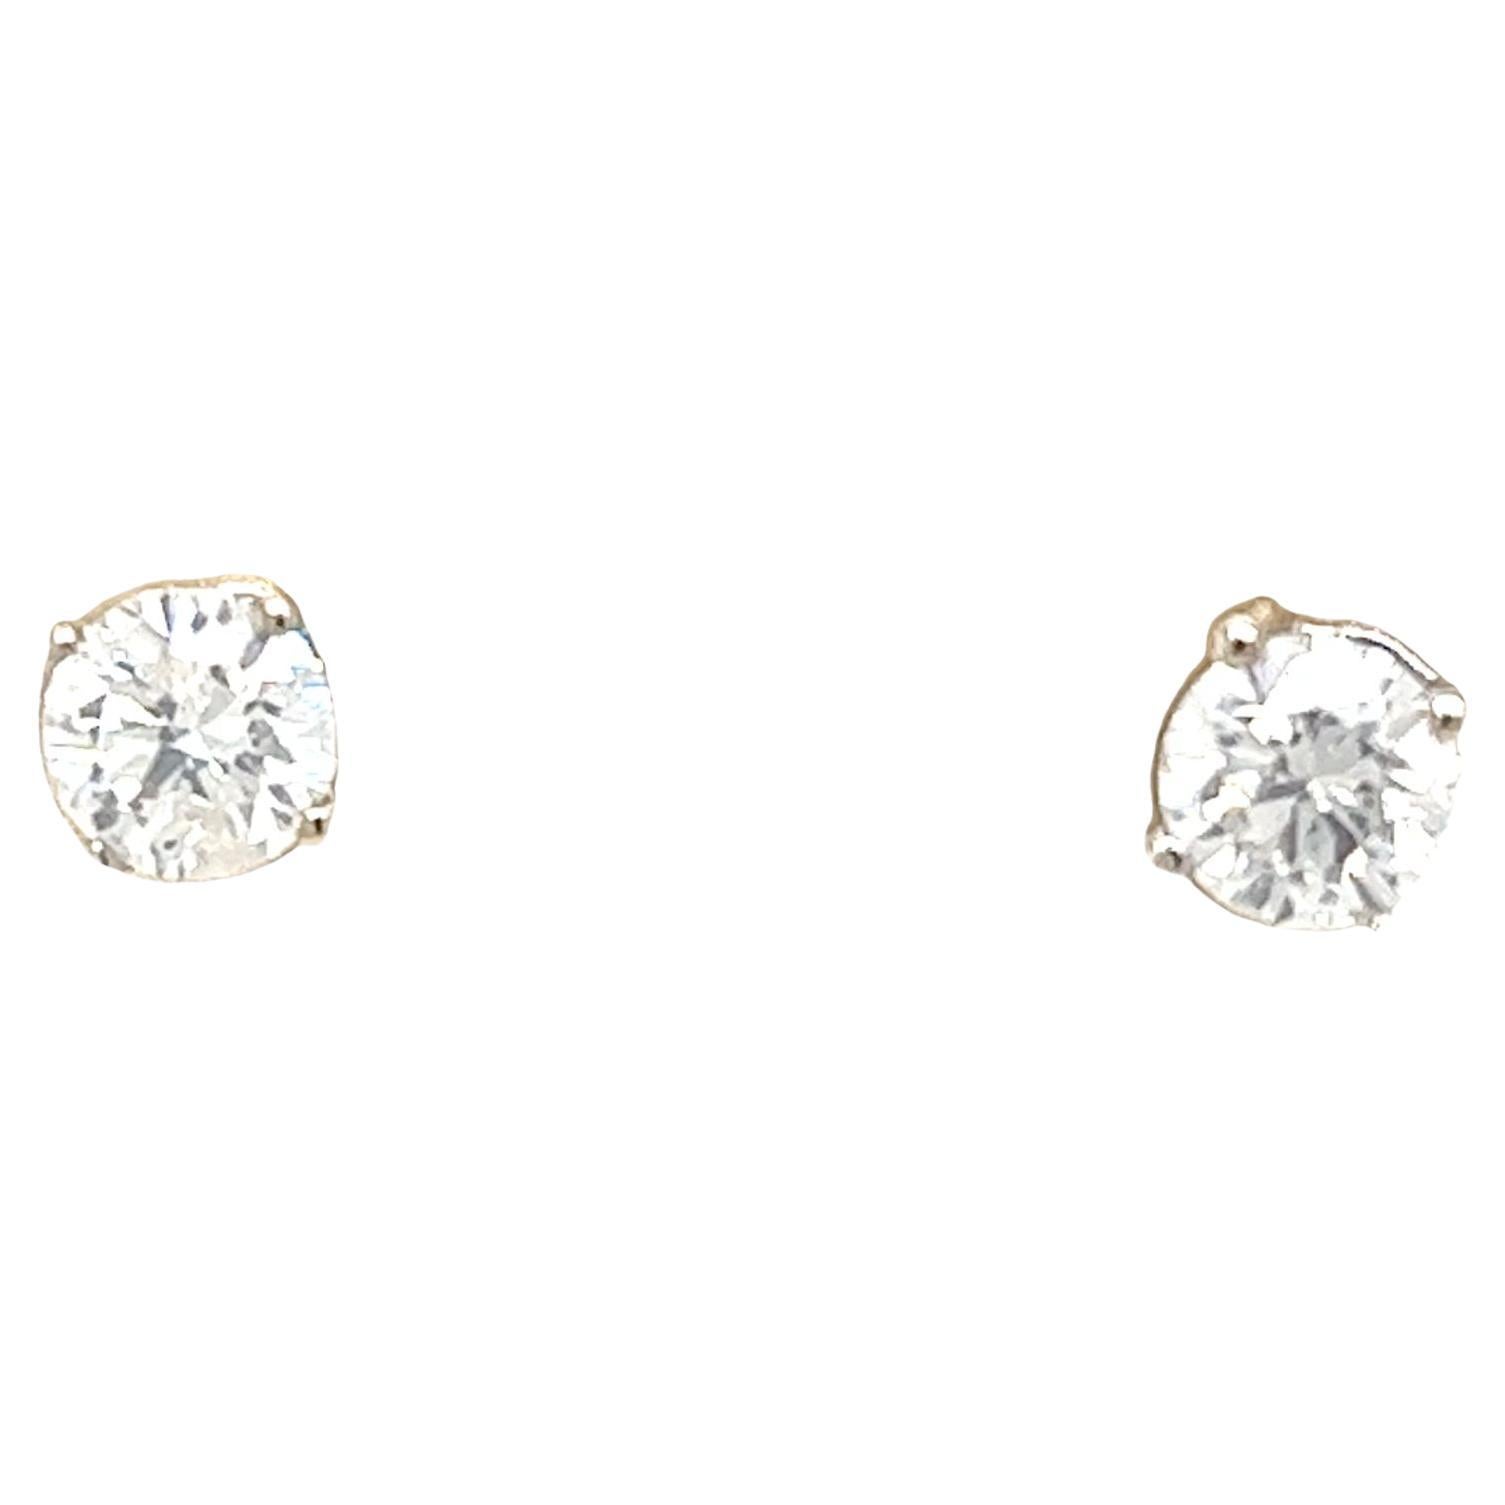 9ct Yellow & White Gold Diamond Stud Earrings, 0.65ct Total Diamond Weight